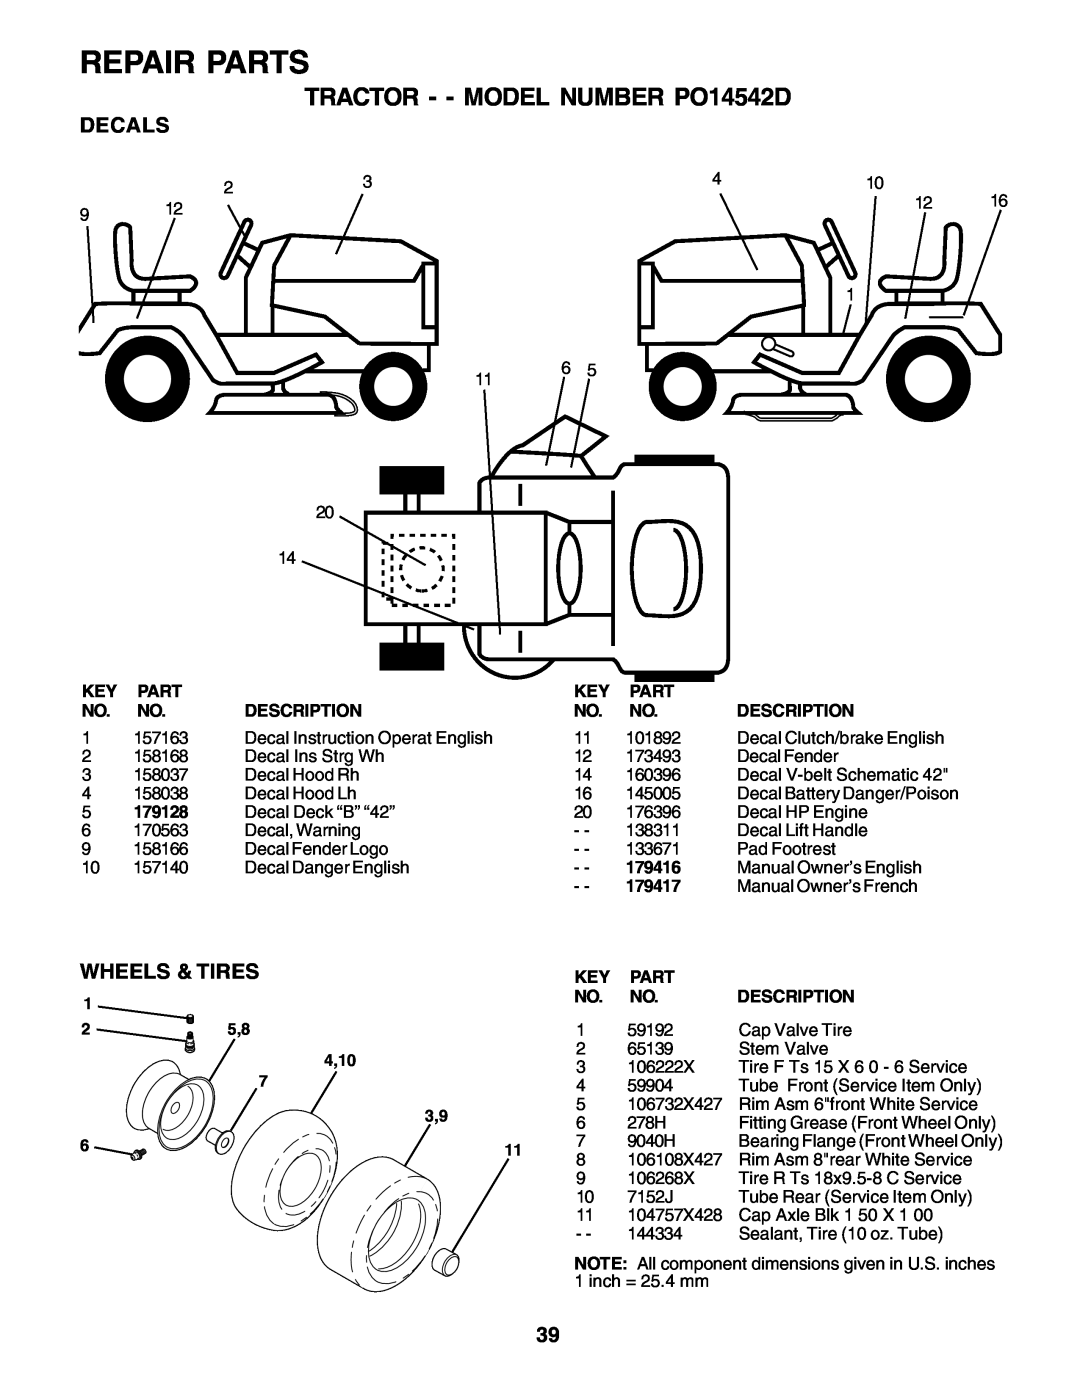 Poulan Repair Parts, TRACTOR - - MODEL NUMBER PO14542D, Decals, Wheels & Tires, Description, 179128, 179416, 179417 